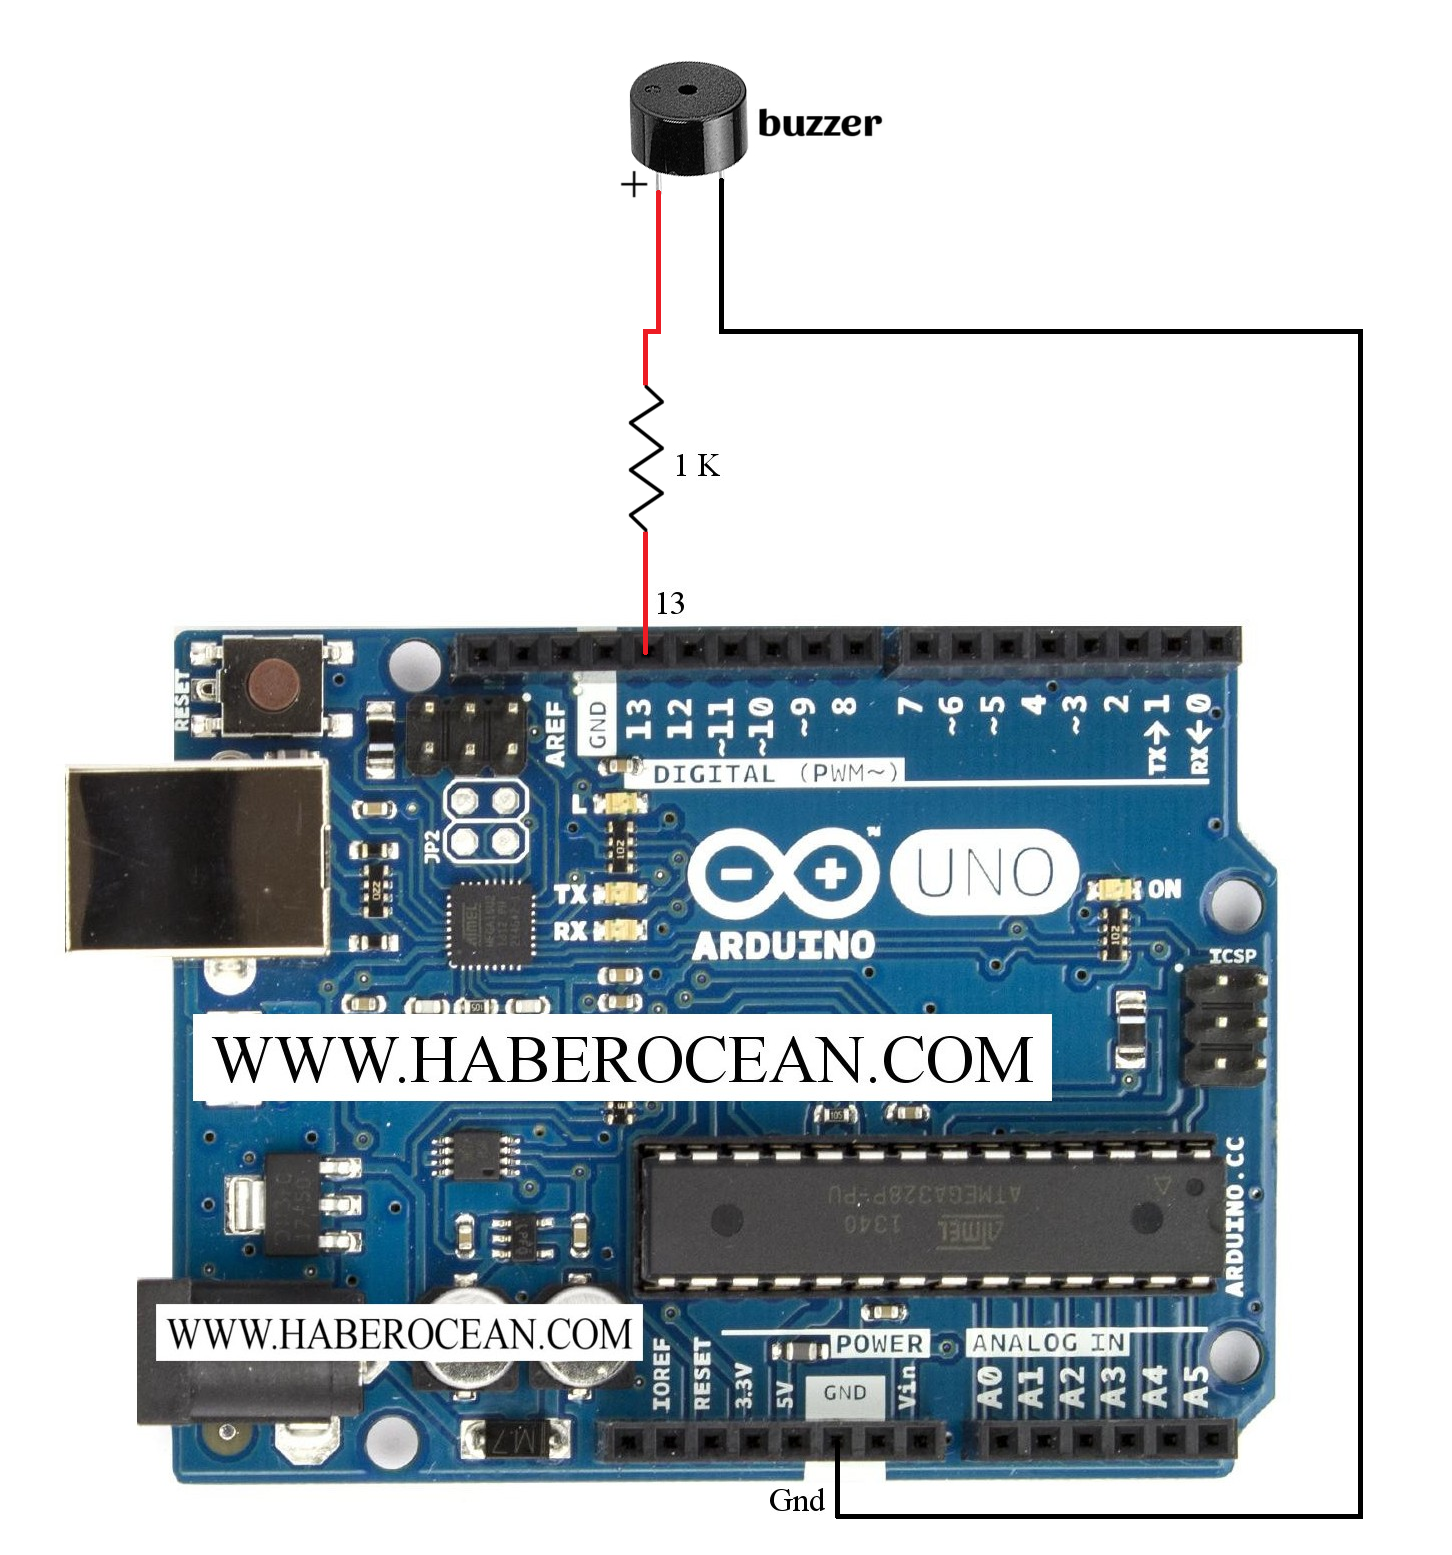 How to Set up a Buzzer With an Arduino, Arduino